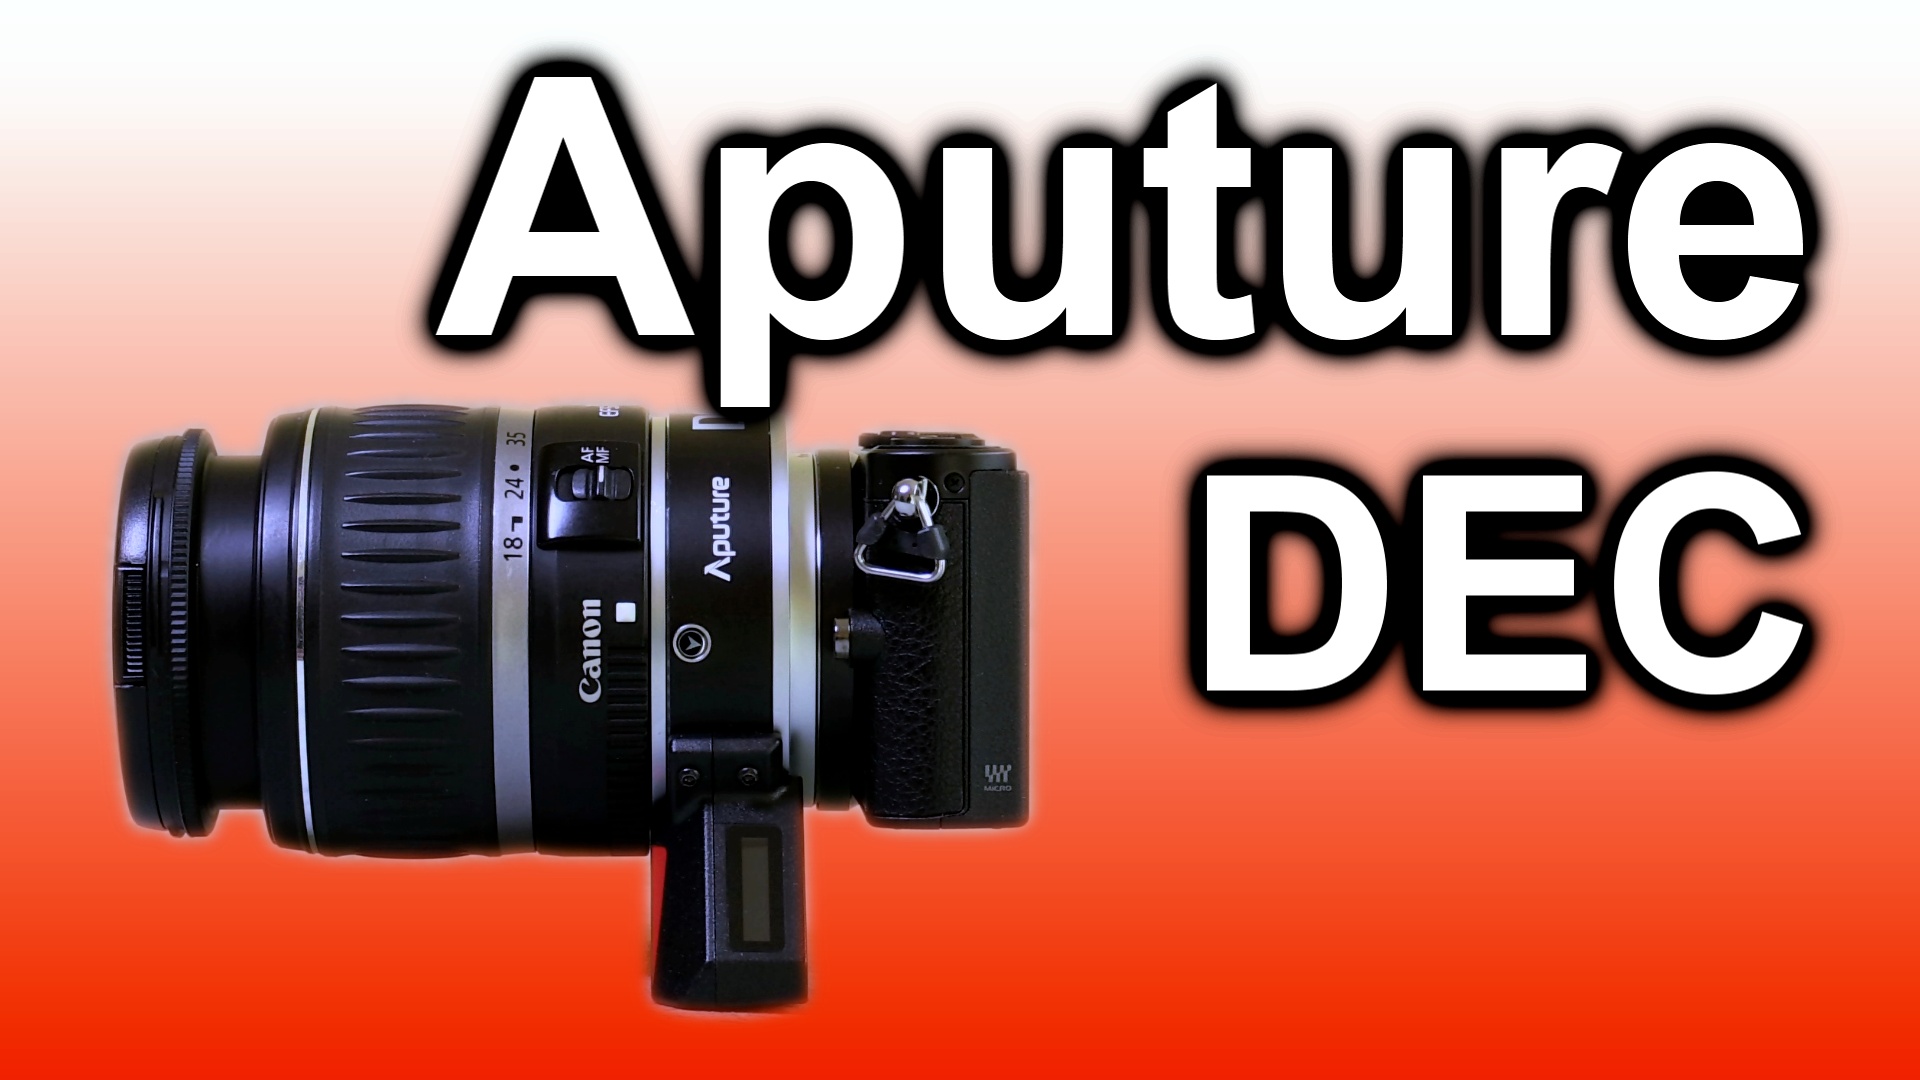 Aputure DEC review thumbnail